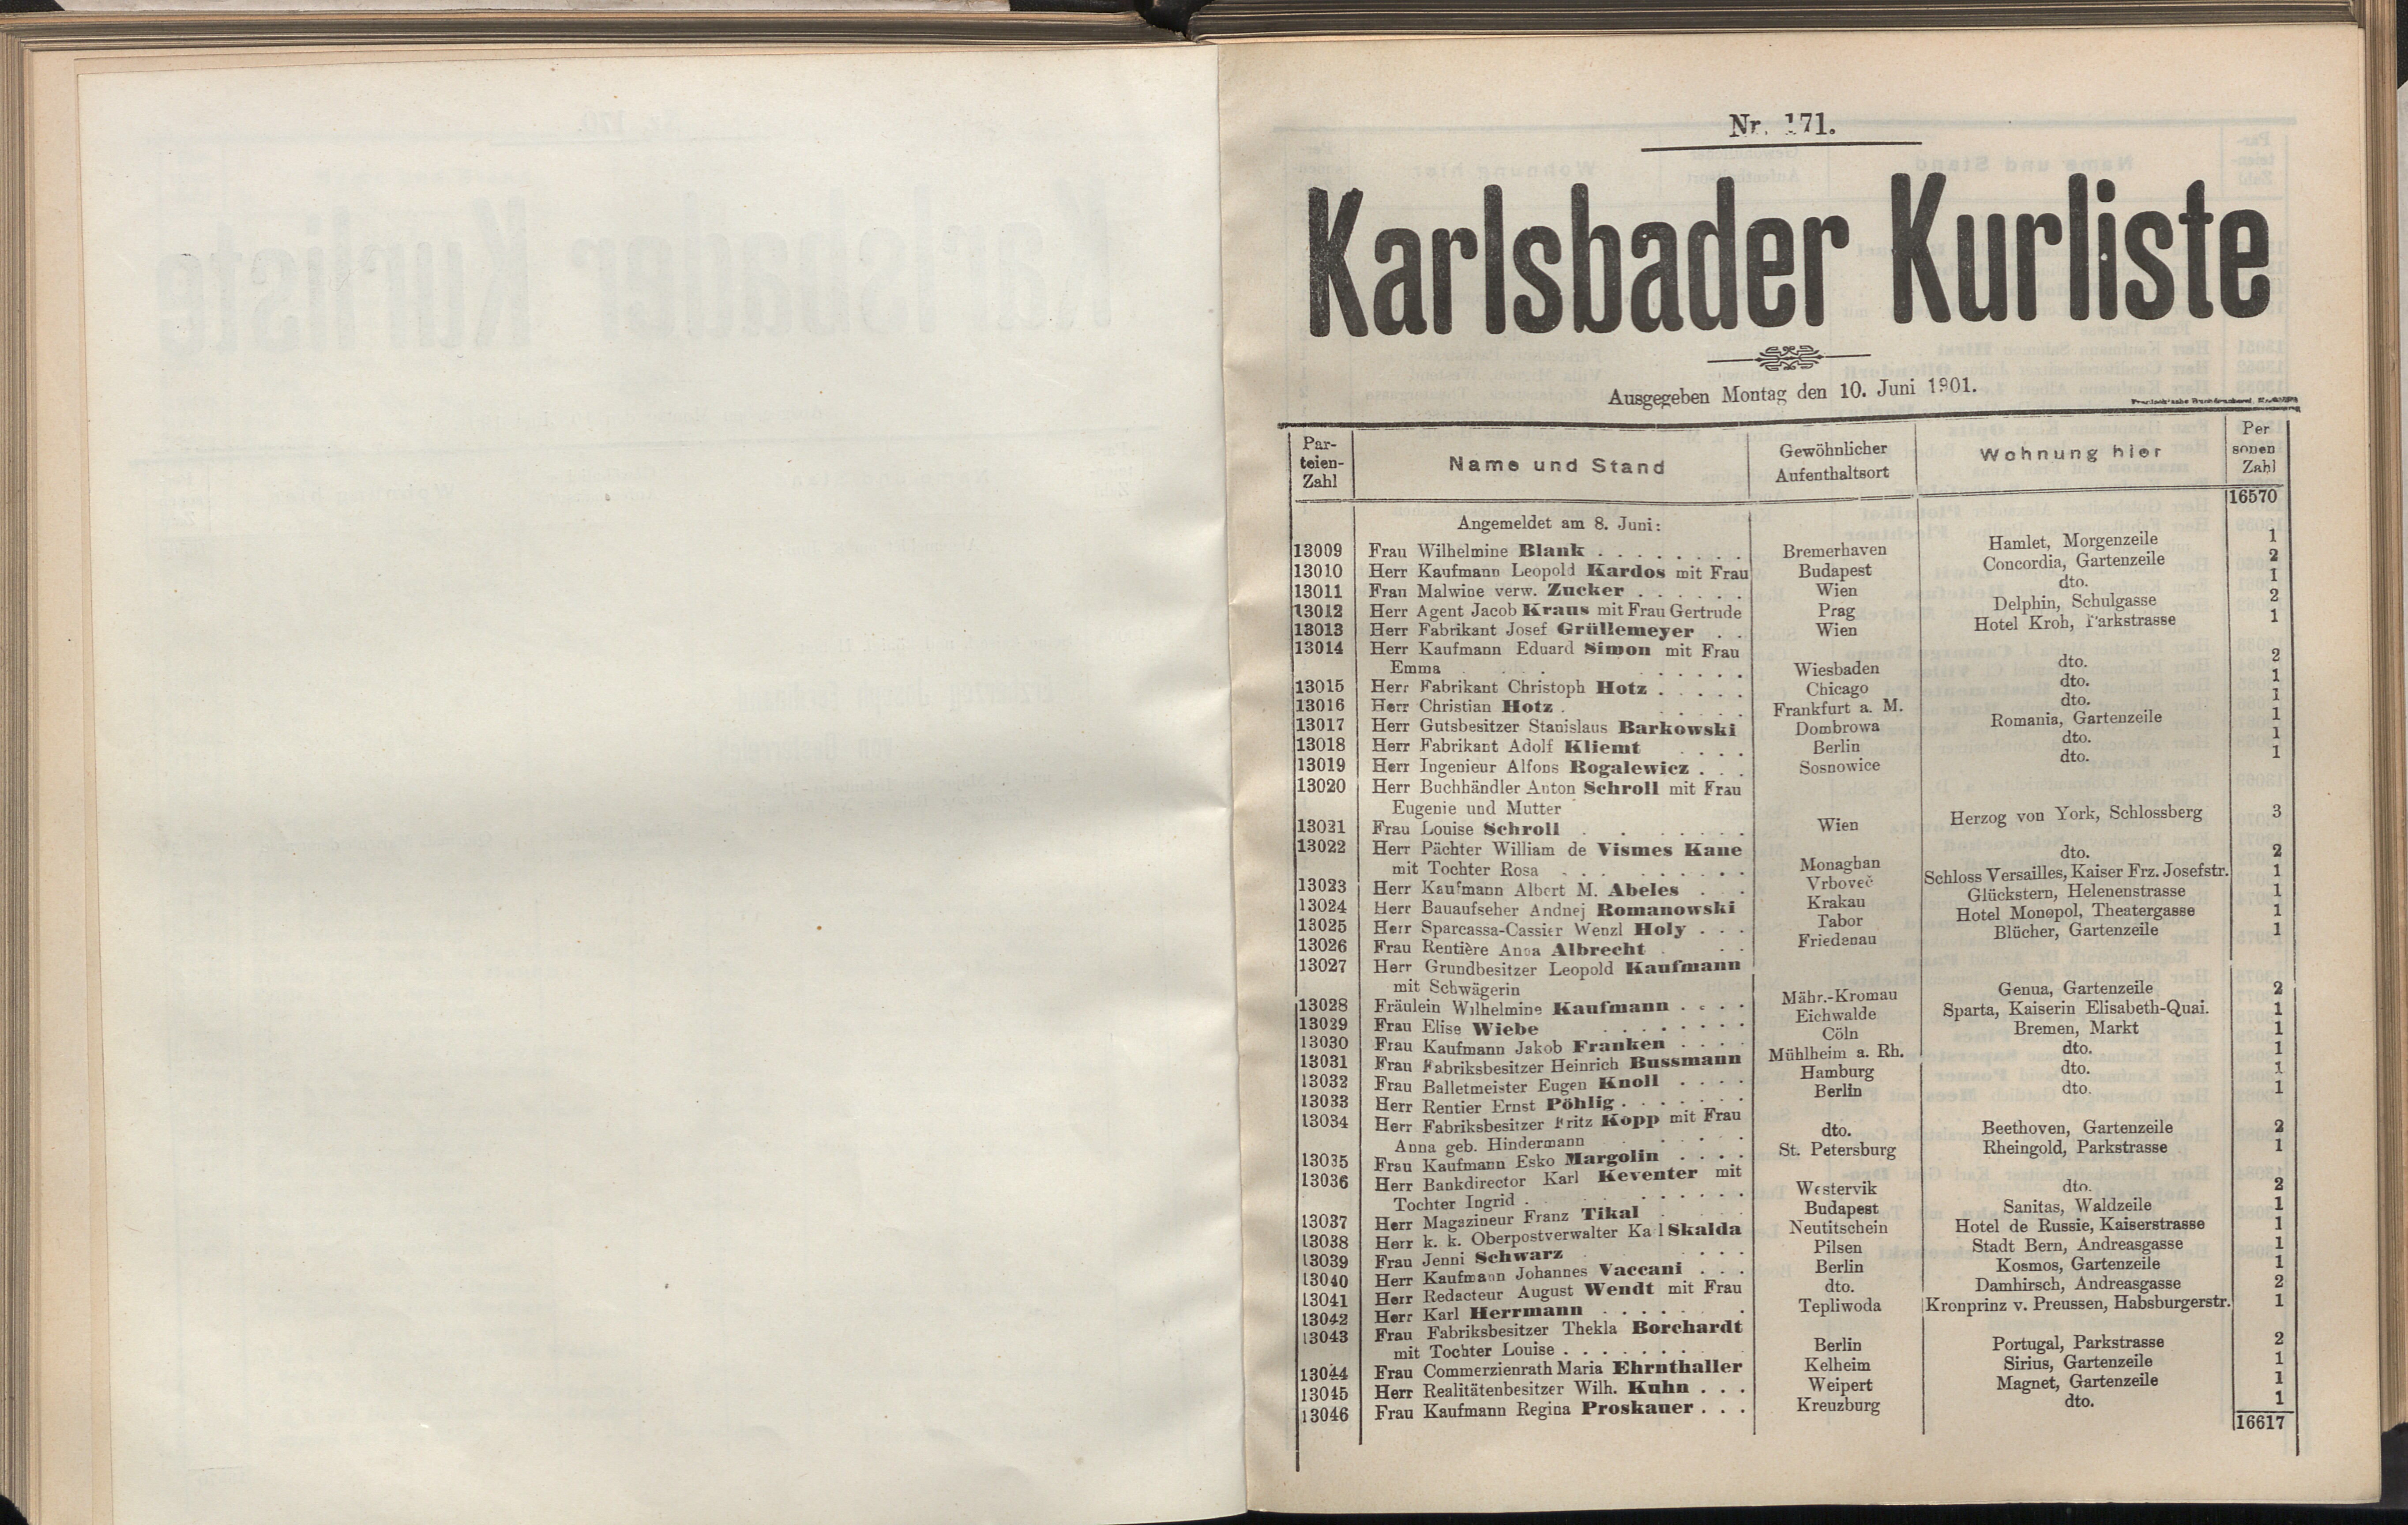 196. soap-kv_knihovna_karlsbader-kurliste-1901_1980